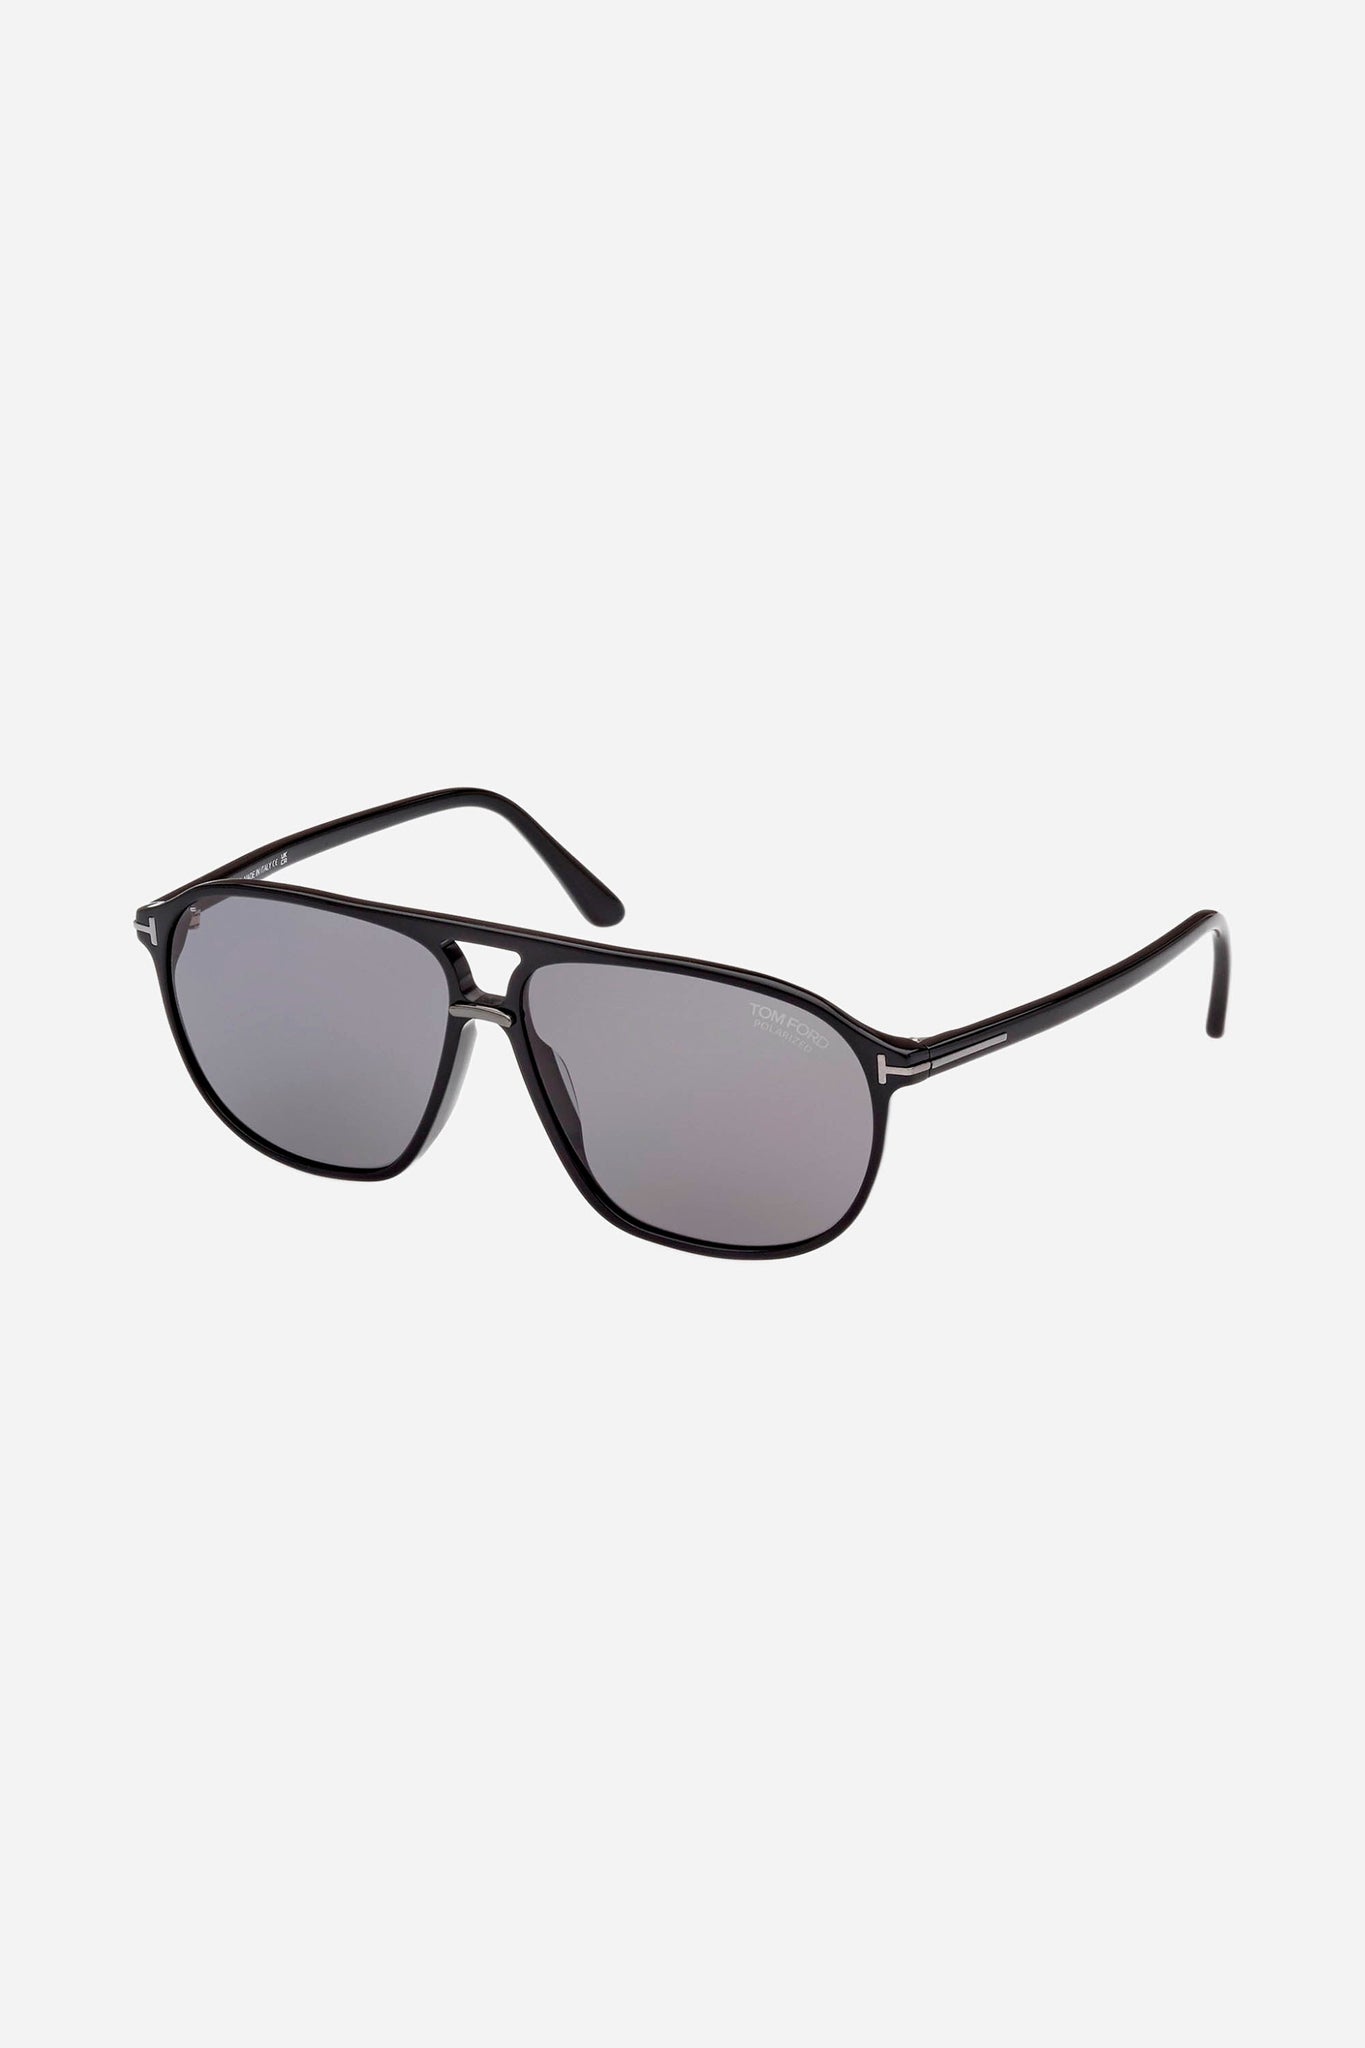 Tom Ford navigator sunglasses with shiny black frame